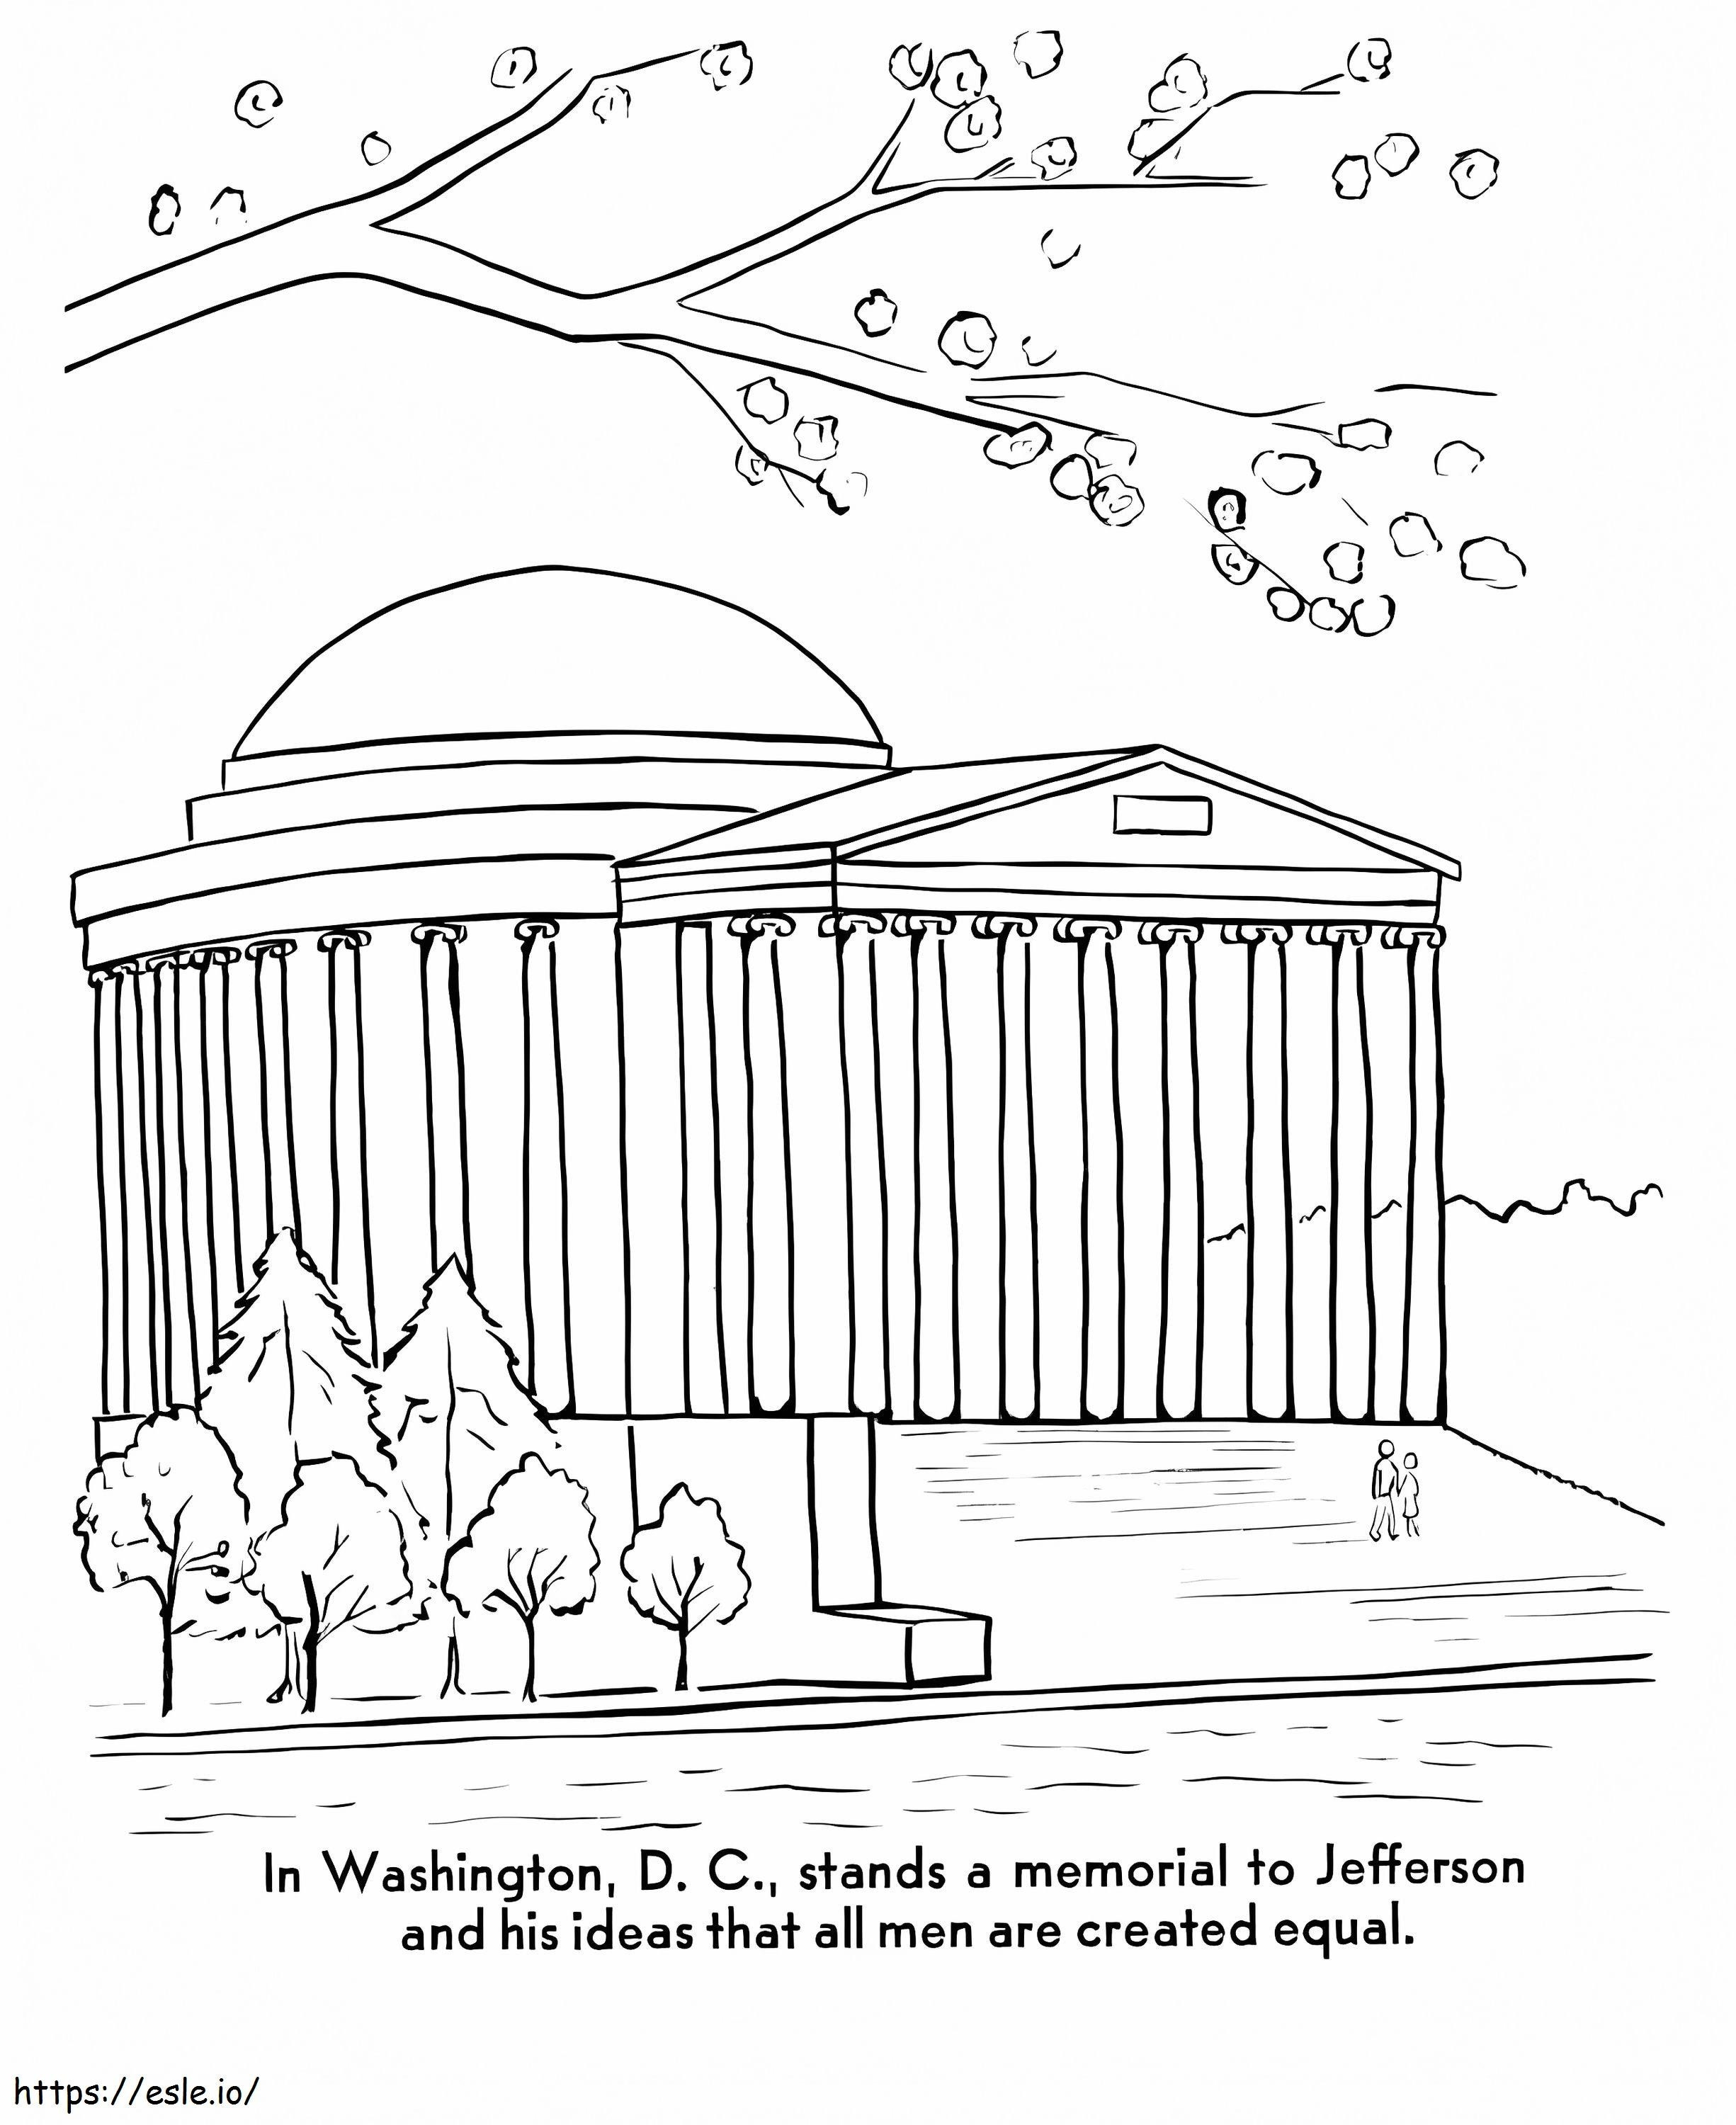 Jefferson Memorial coloring page